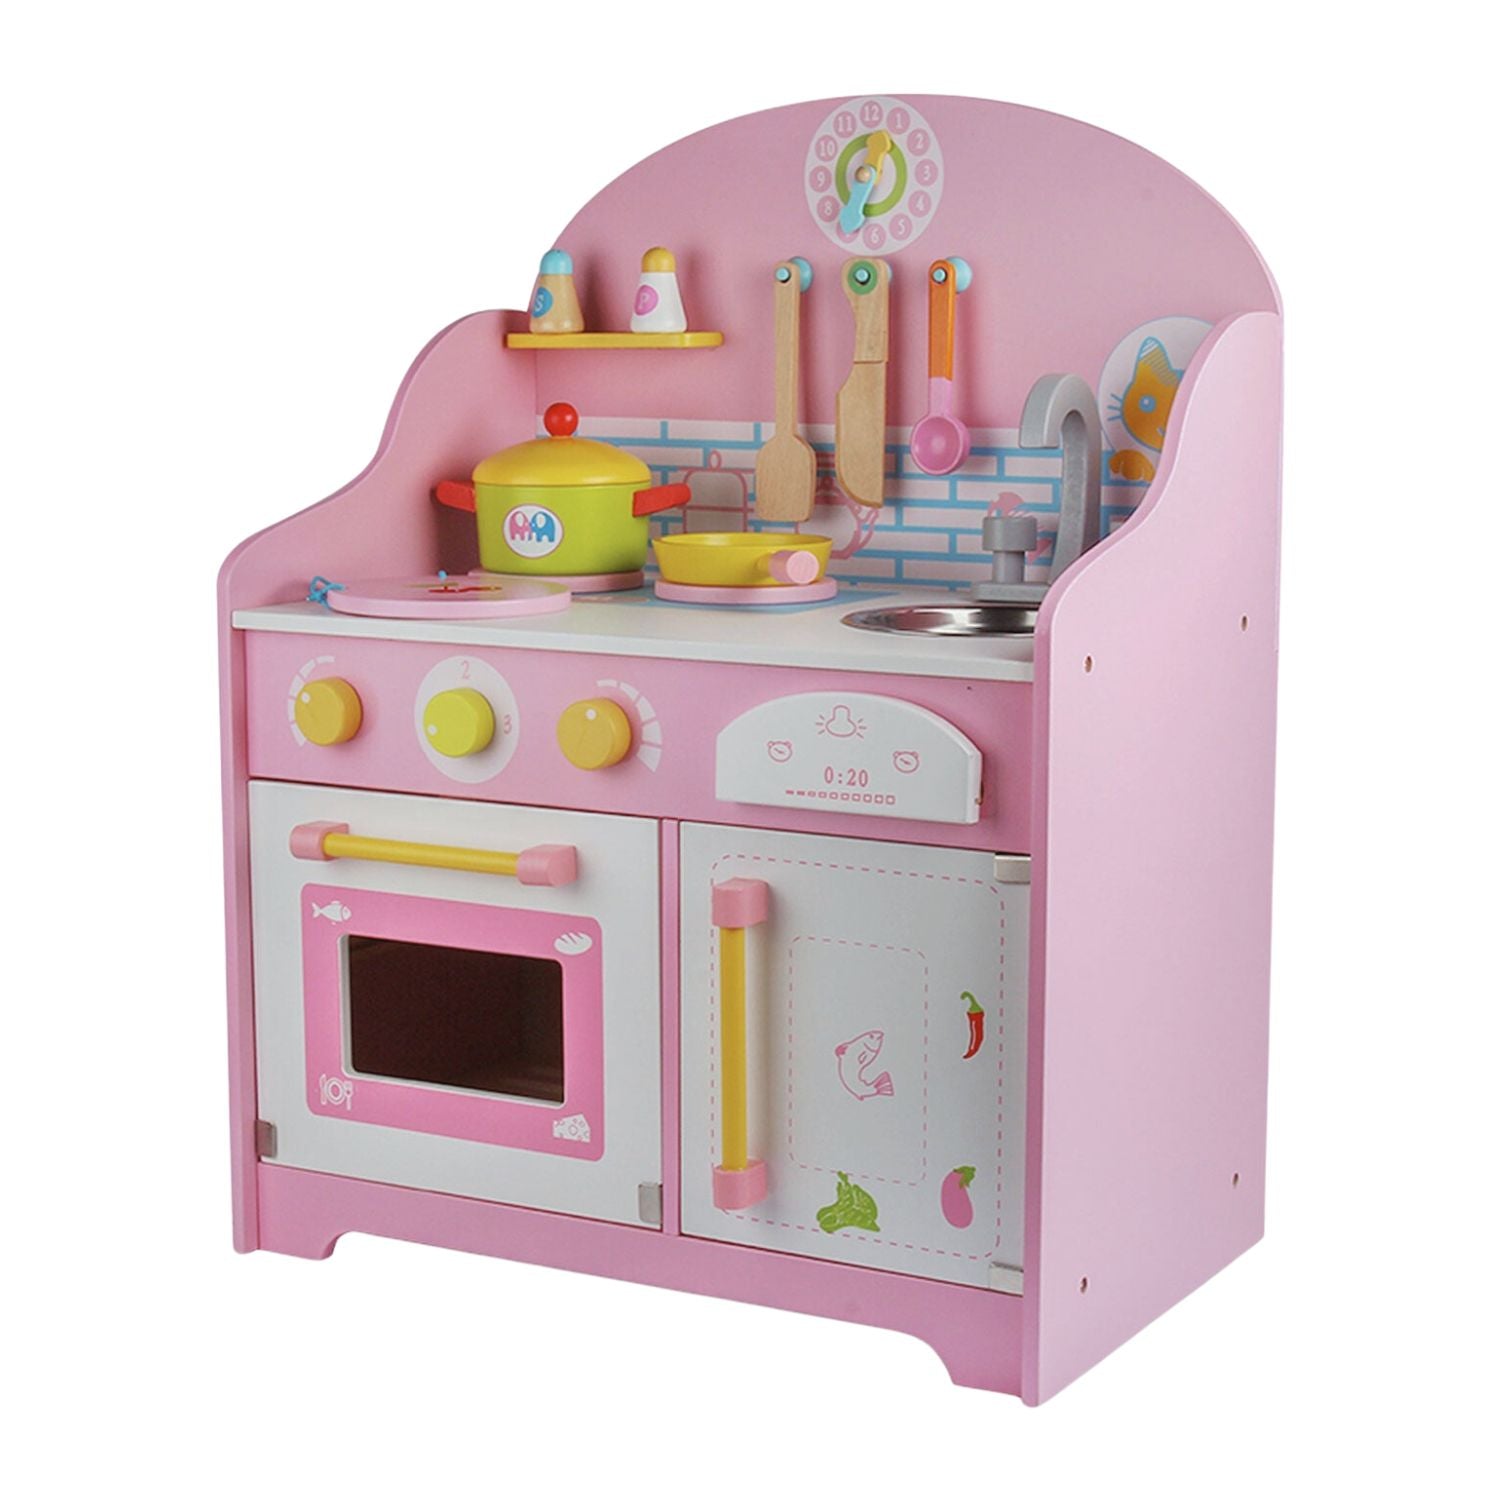 EKKIO Wooden Kitchen Playset for Kids with Clock (Japanese Style Kitchen Set, Pink) EK-KP-109-MS